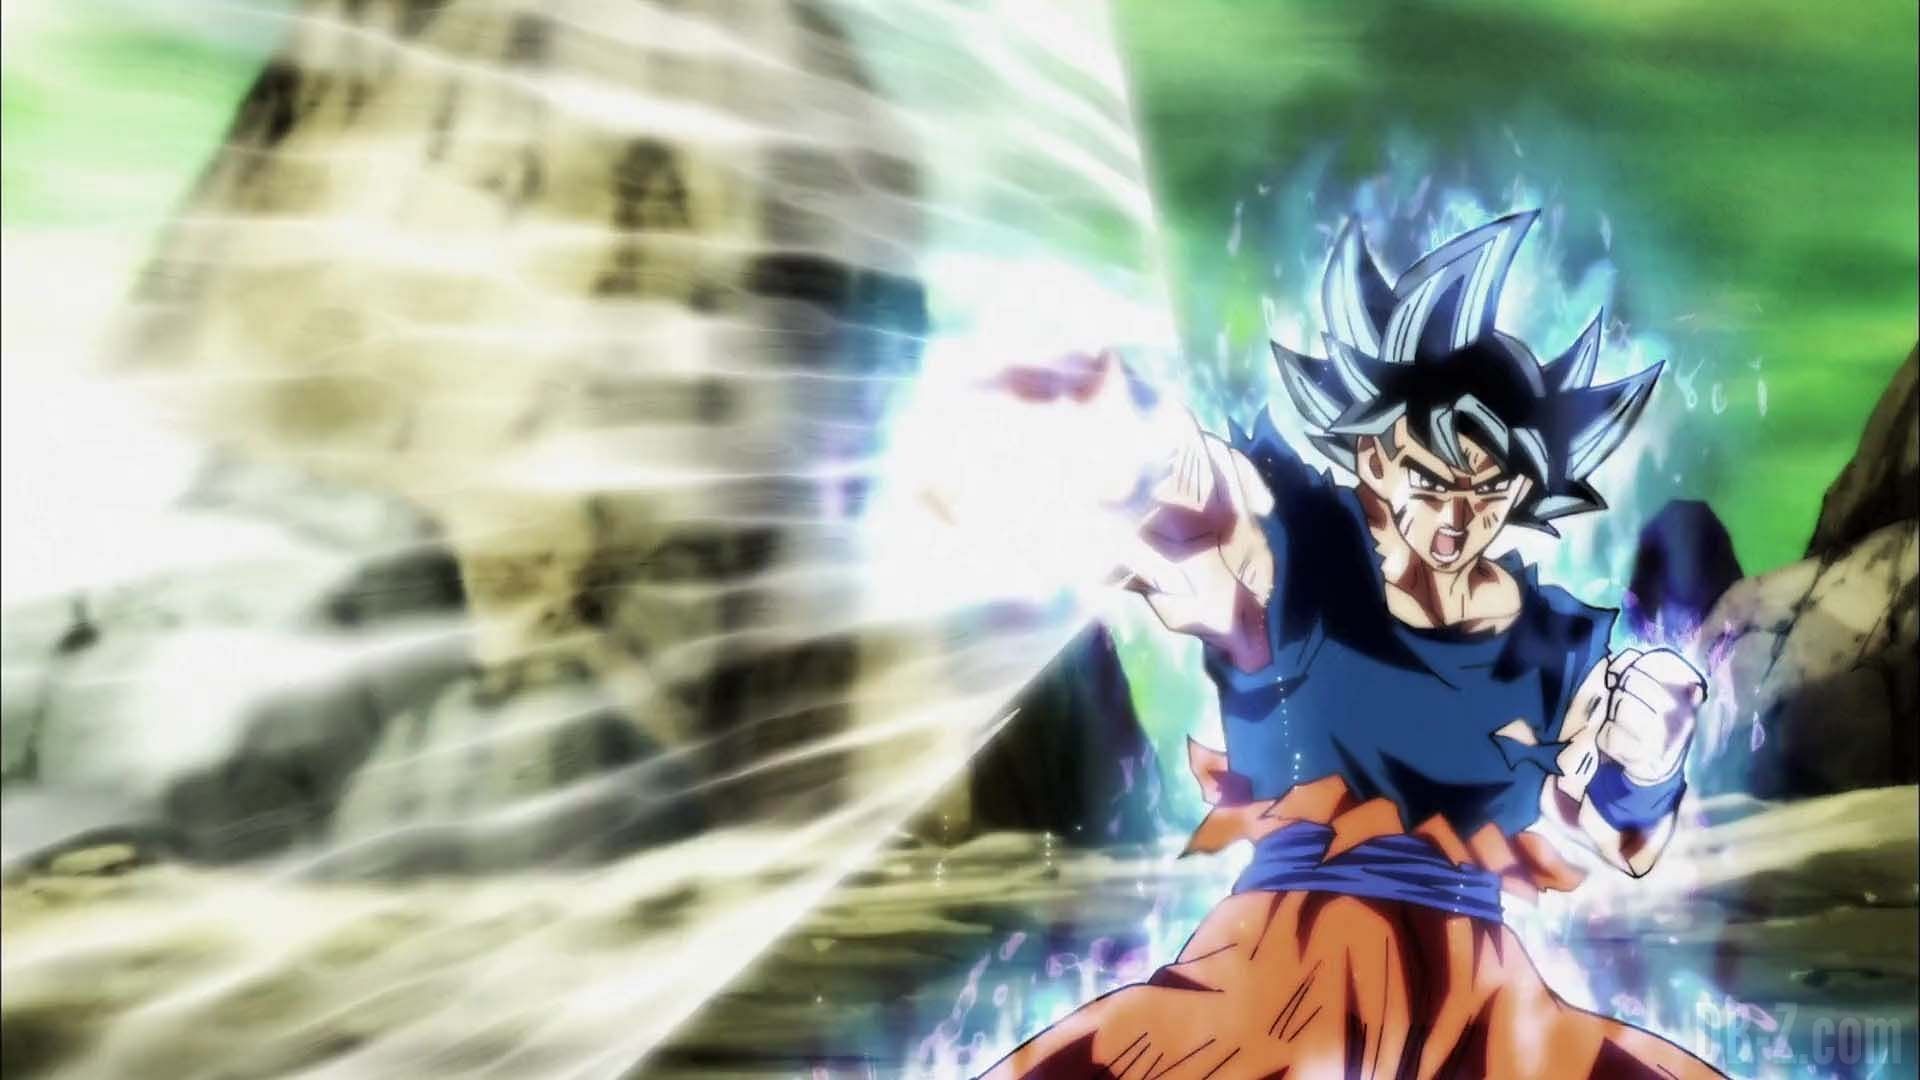 Ultra Instinct Goku as seen in the Super anime (Image via Toei Animation)